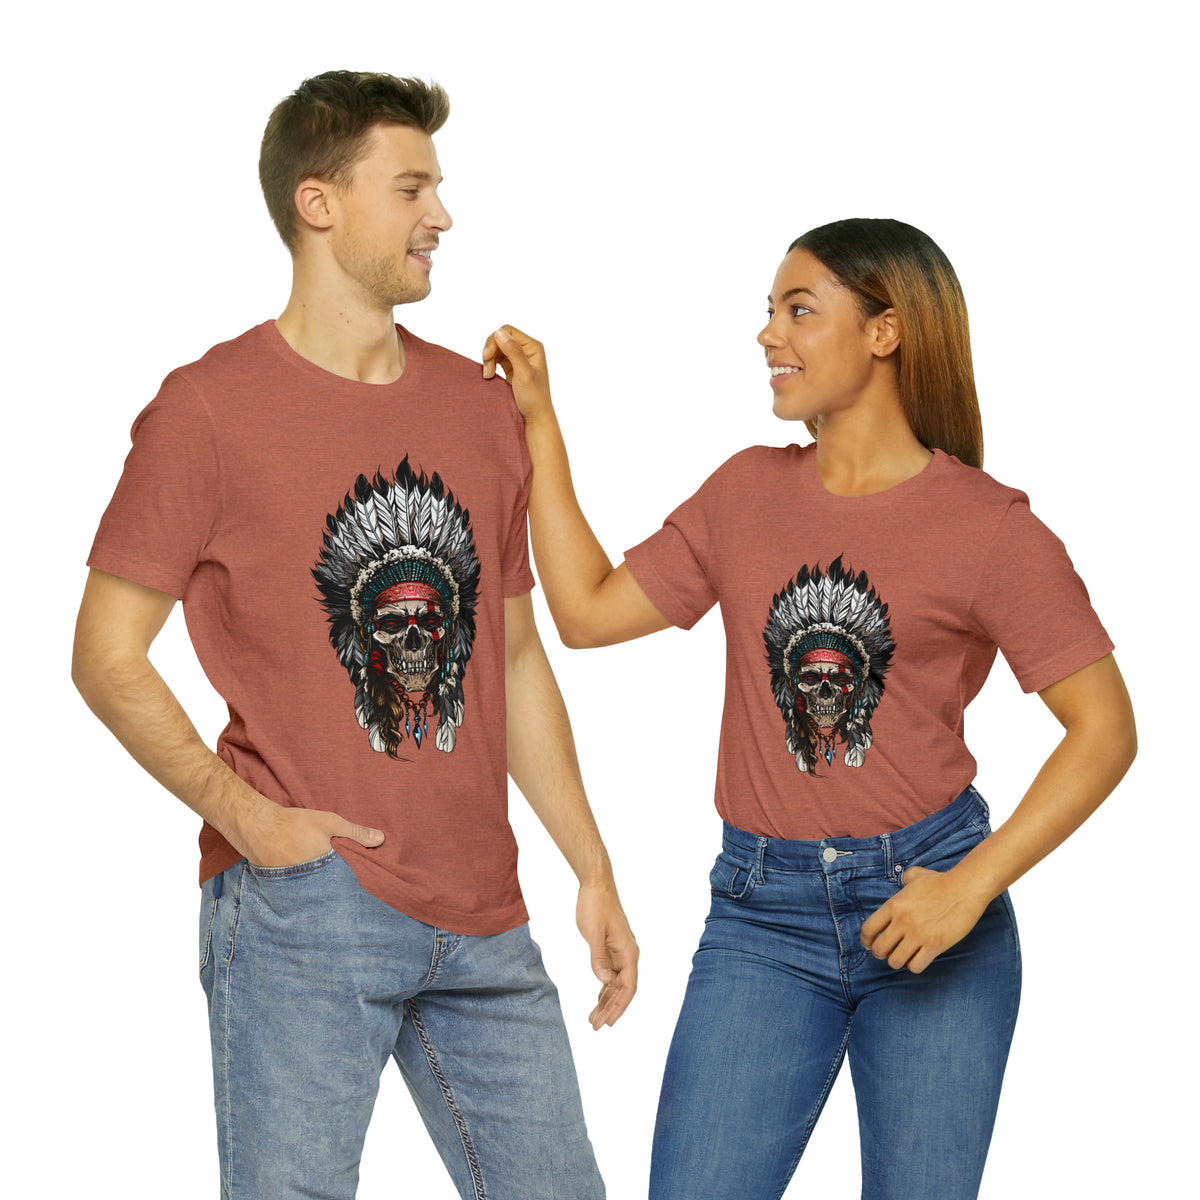 Native American Warrior T Shirt Design Unisex Jersey